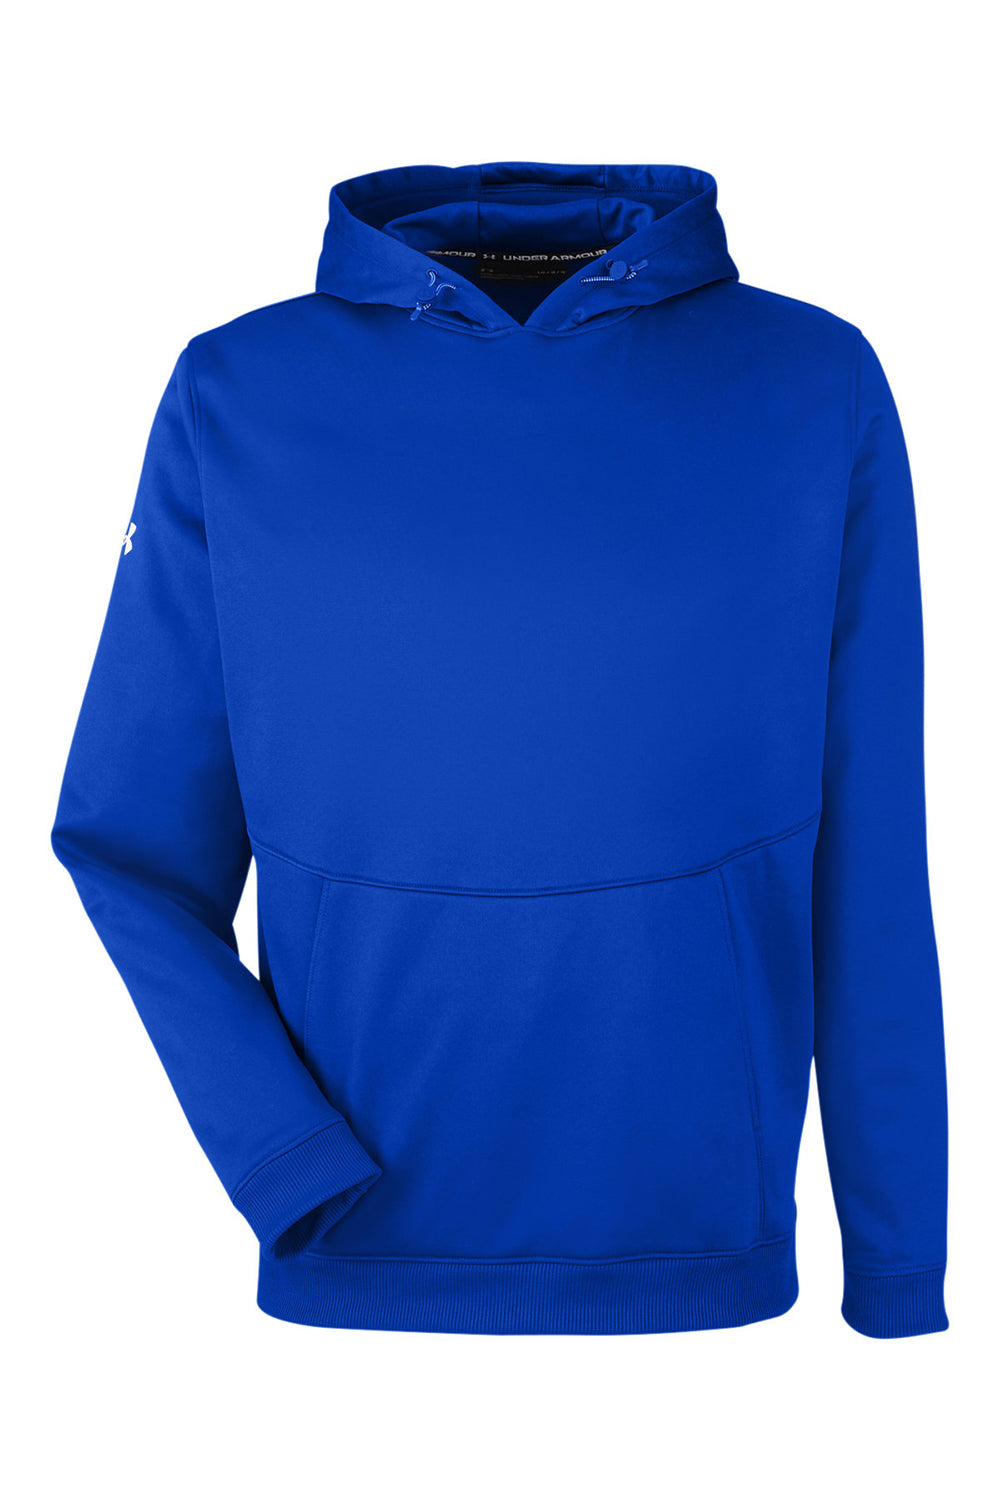 Under Armour 1370379 Mens Storm Armourfleece Water Resistant Hooded Sweatshirt Hoodie Royal Blue Flat Front